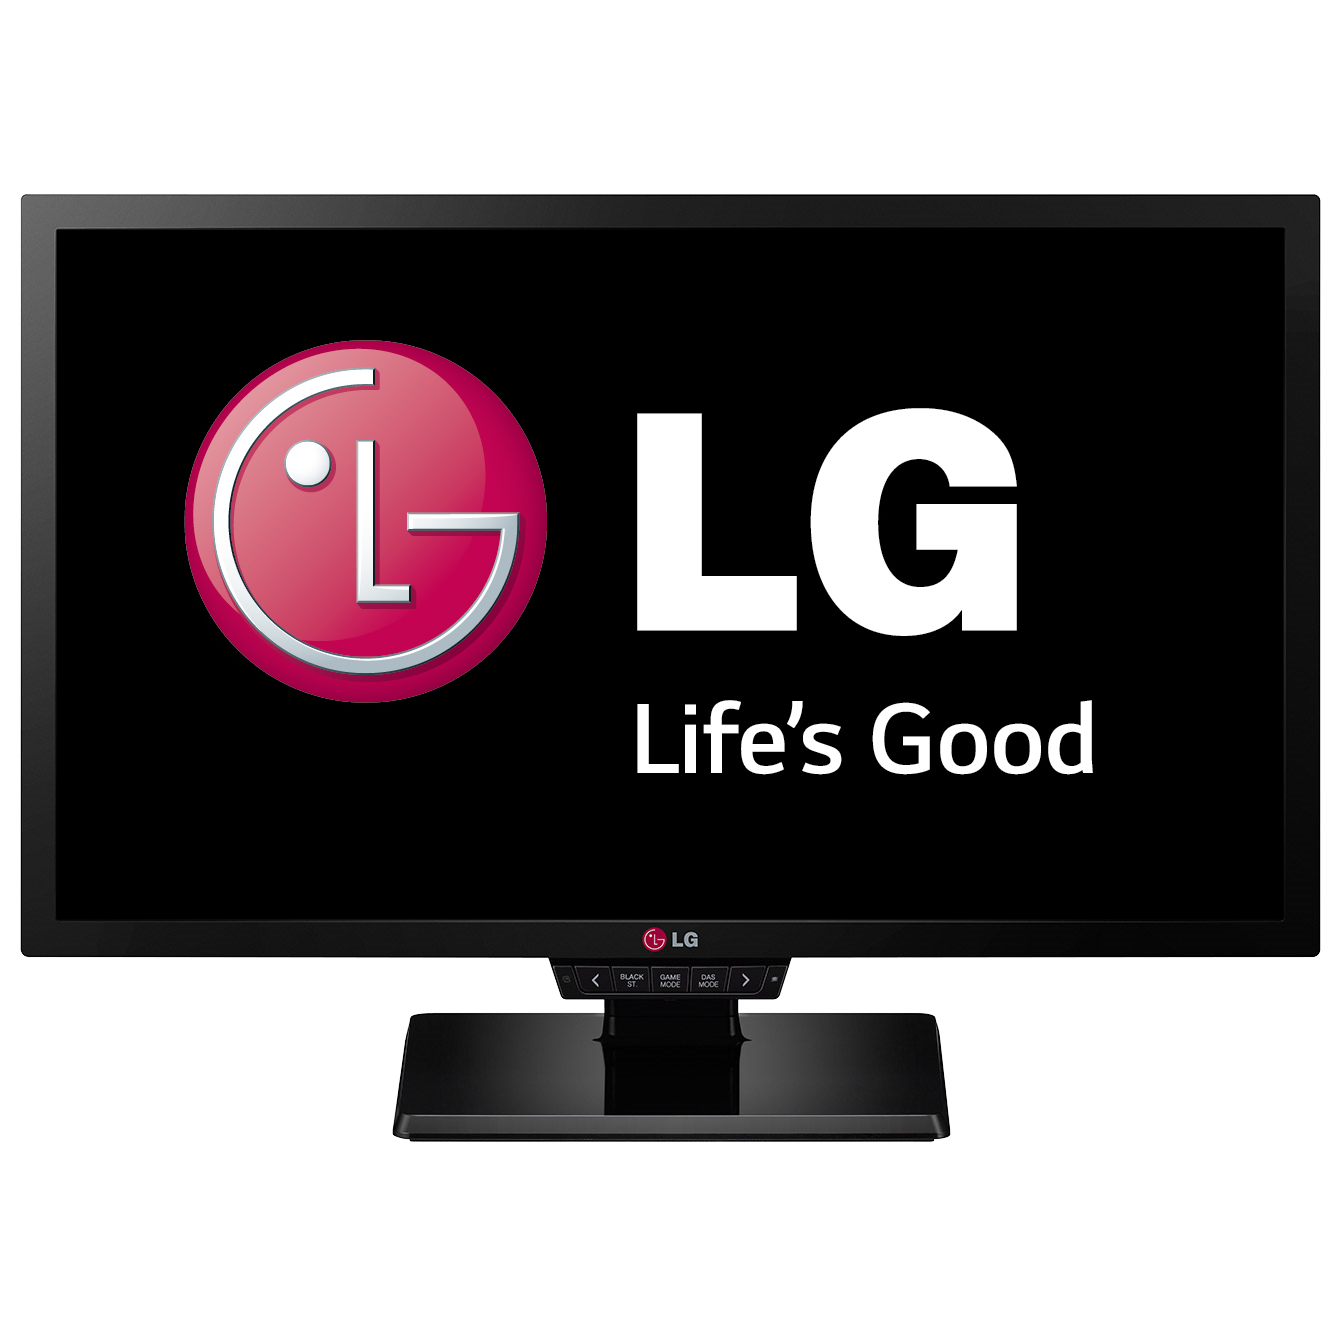 LG Life s good логотип. LG 24gm77. LG logo 2021. Монитор LG Life's good. Лг